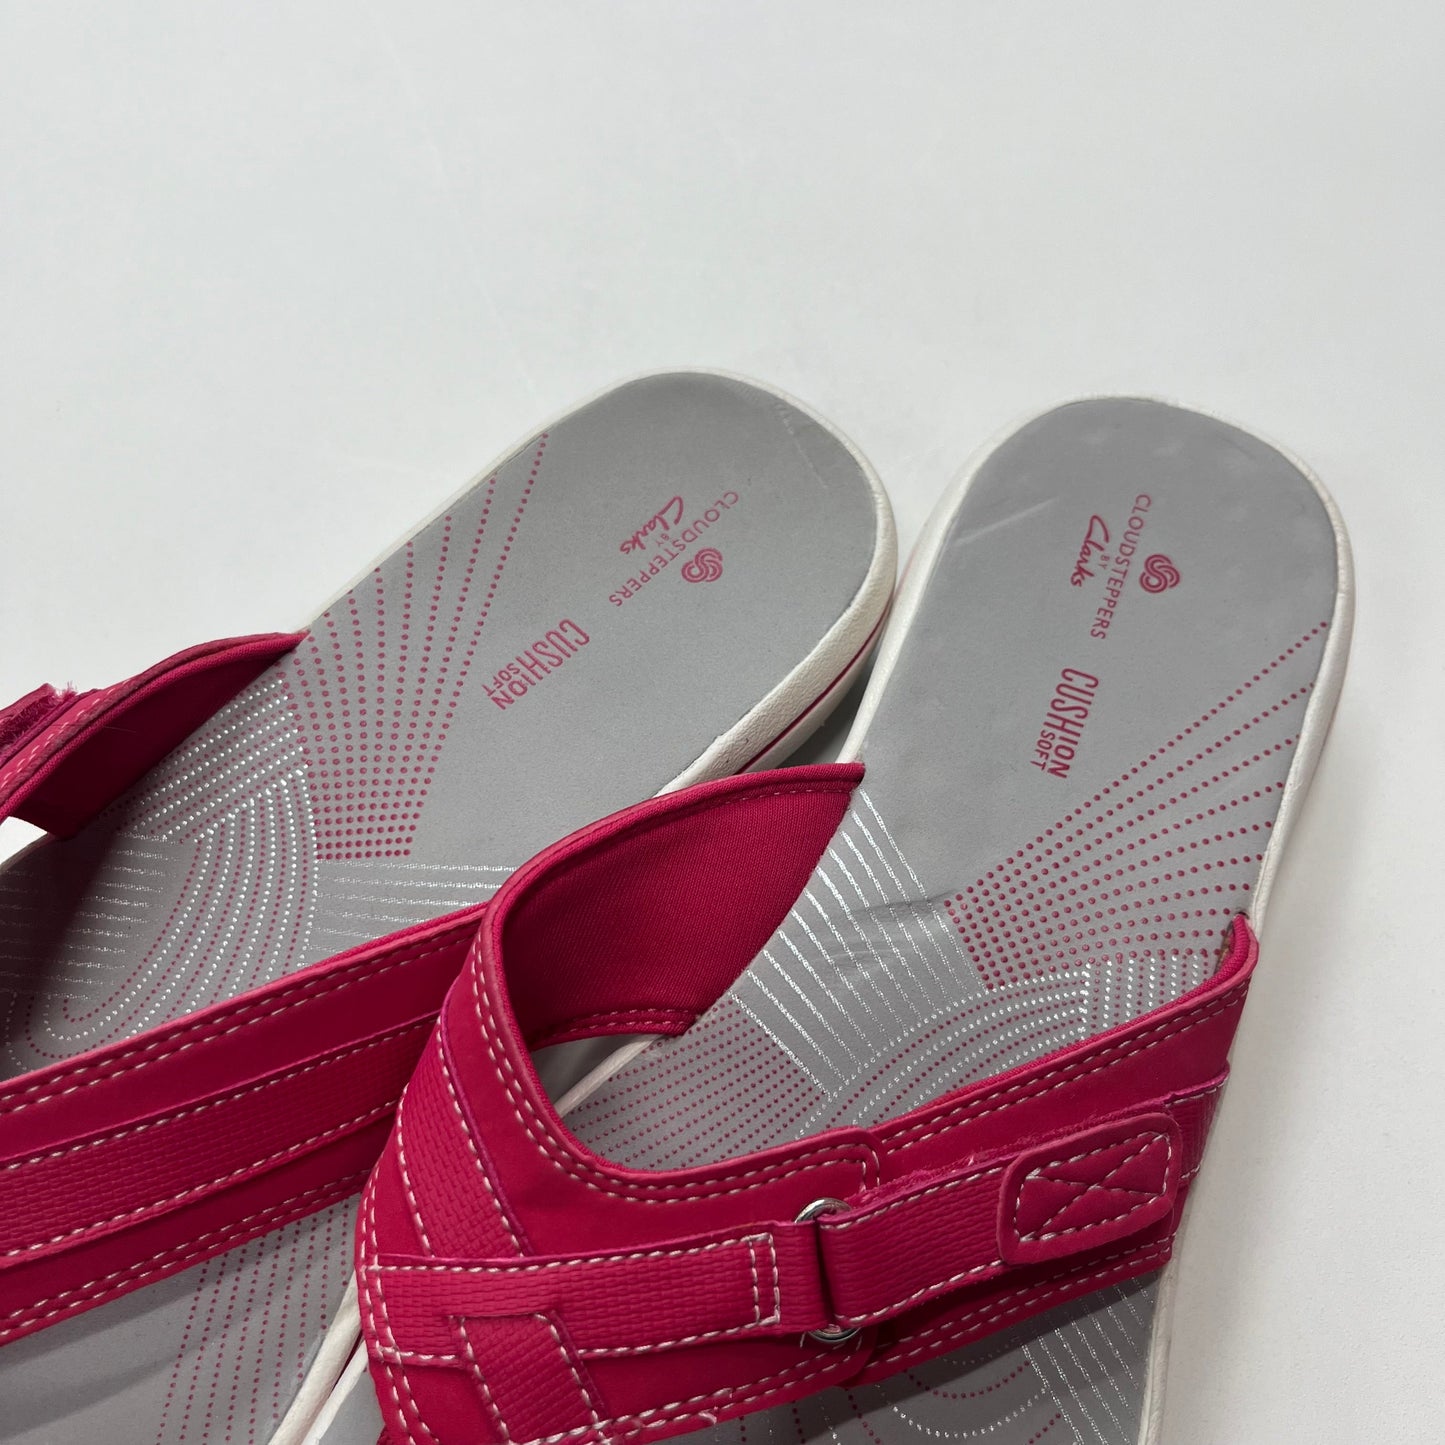 Sandals Flip Flops By Clarks  Size: 8